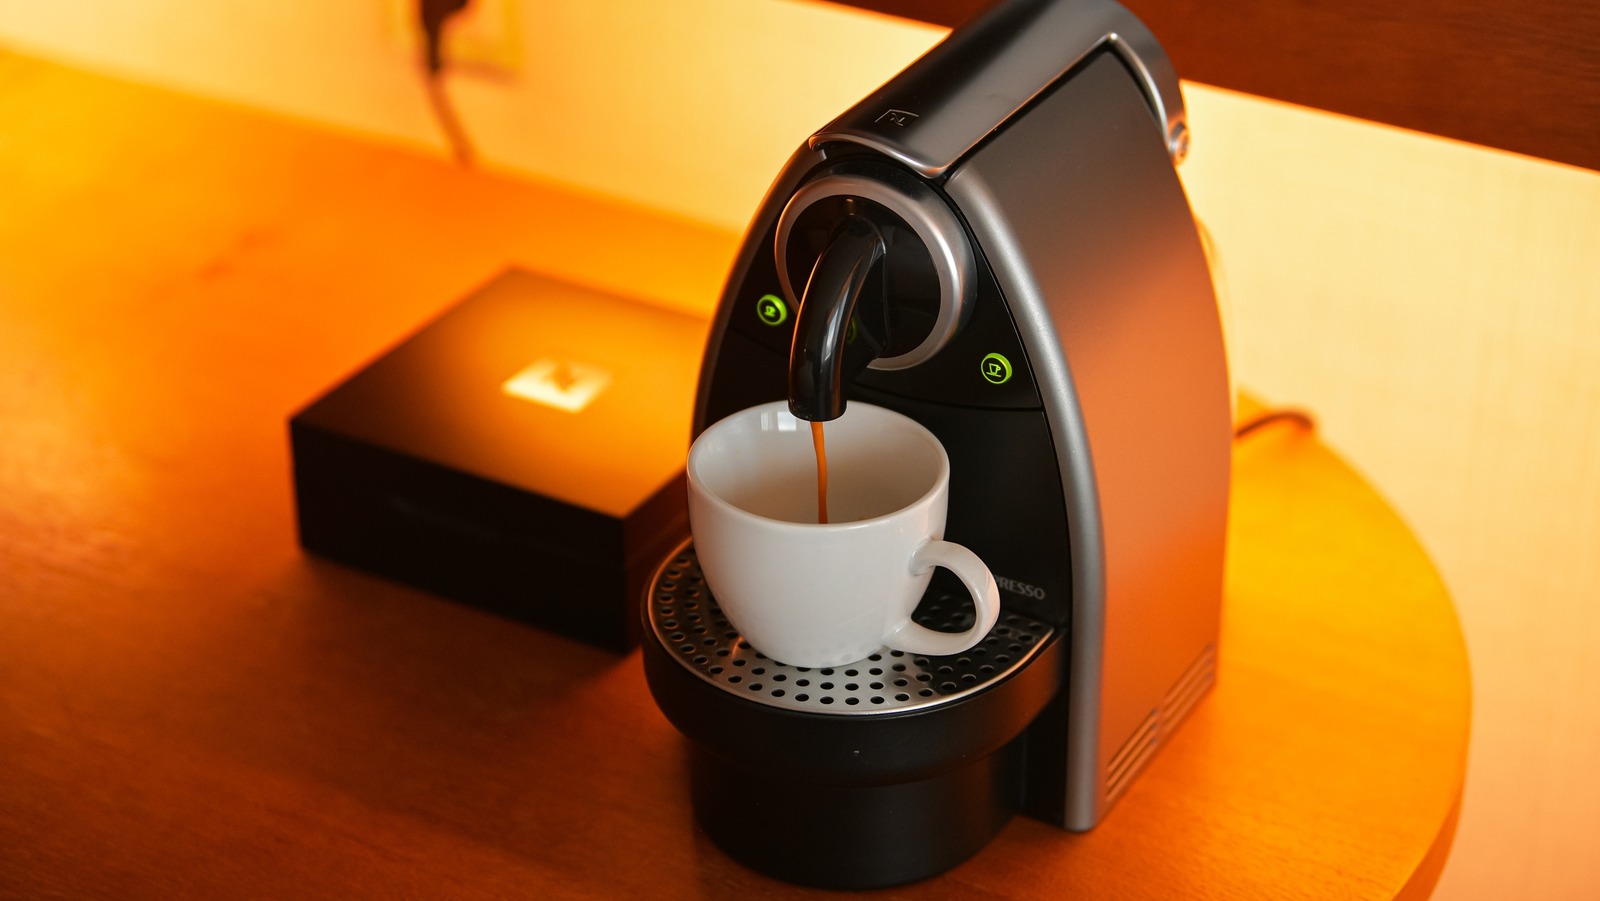 Cleaning Your Nespresso Machine Takes 2 Key Steps